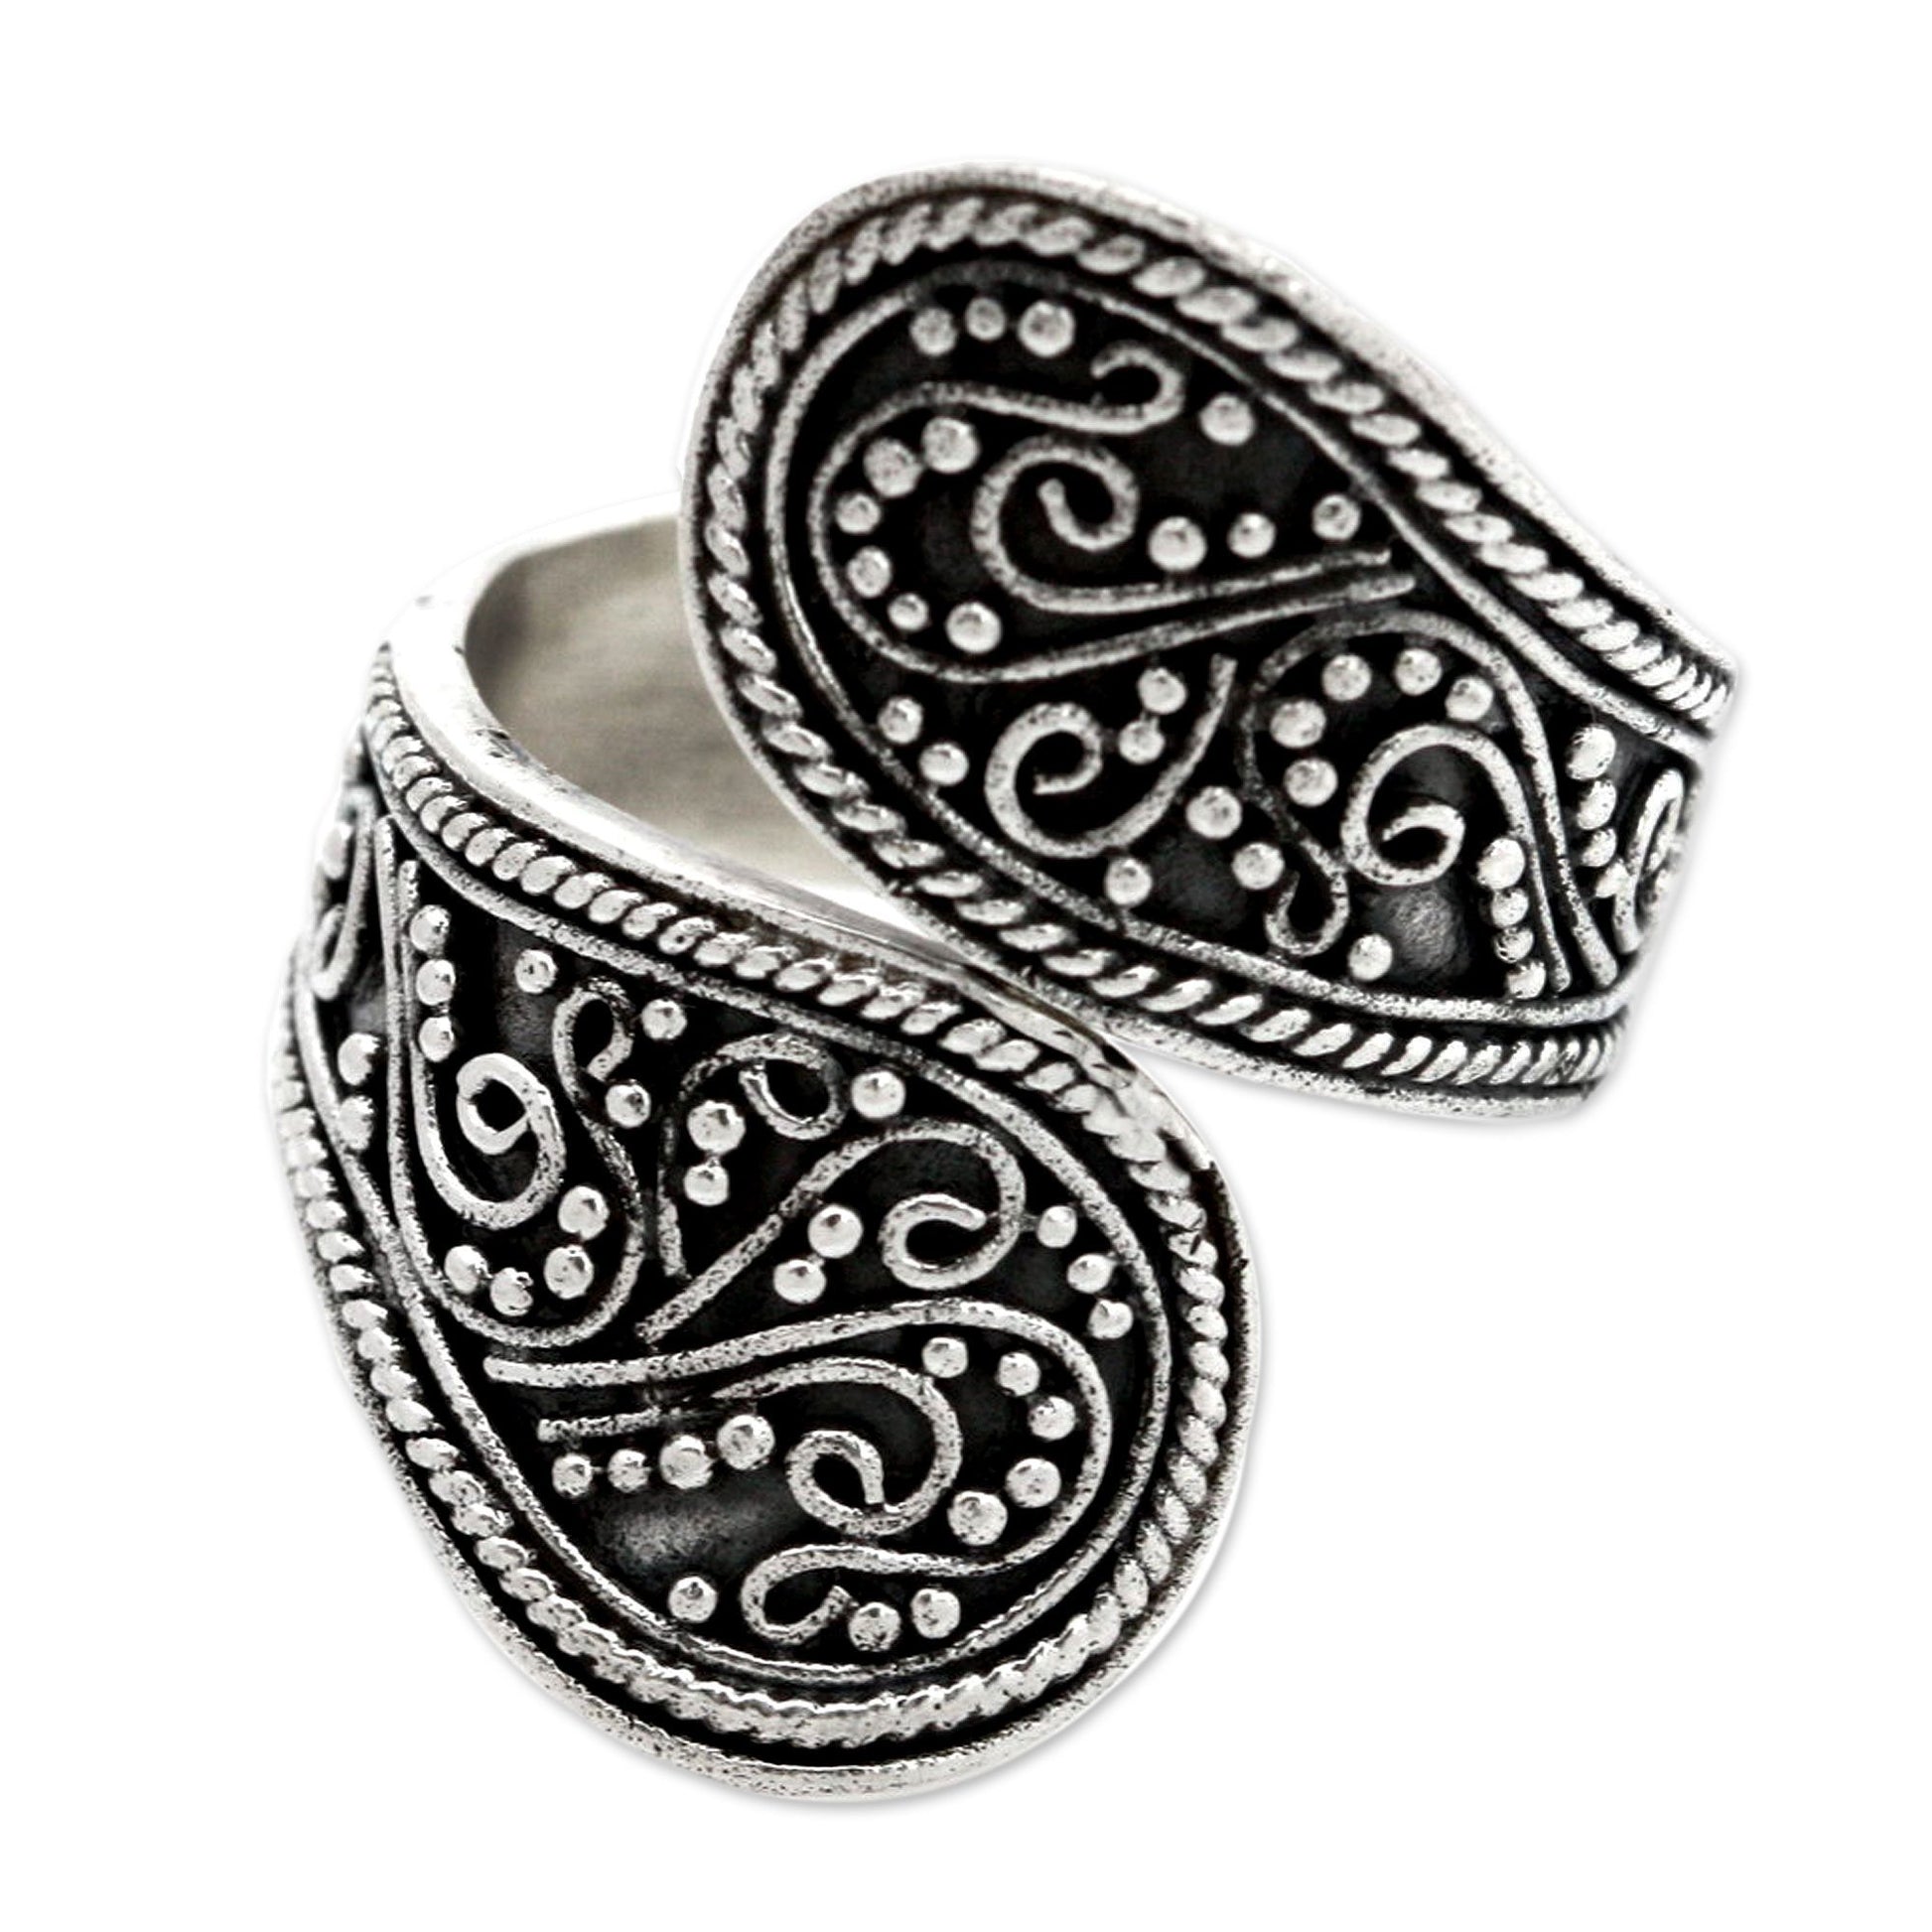 NOVICA - Floral Paisley Silver Wrap Ring